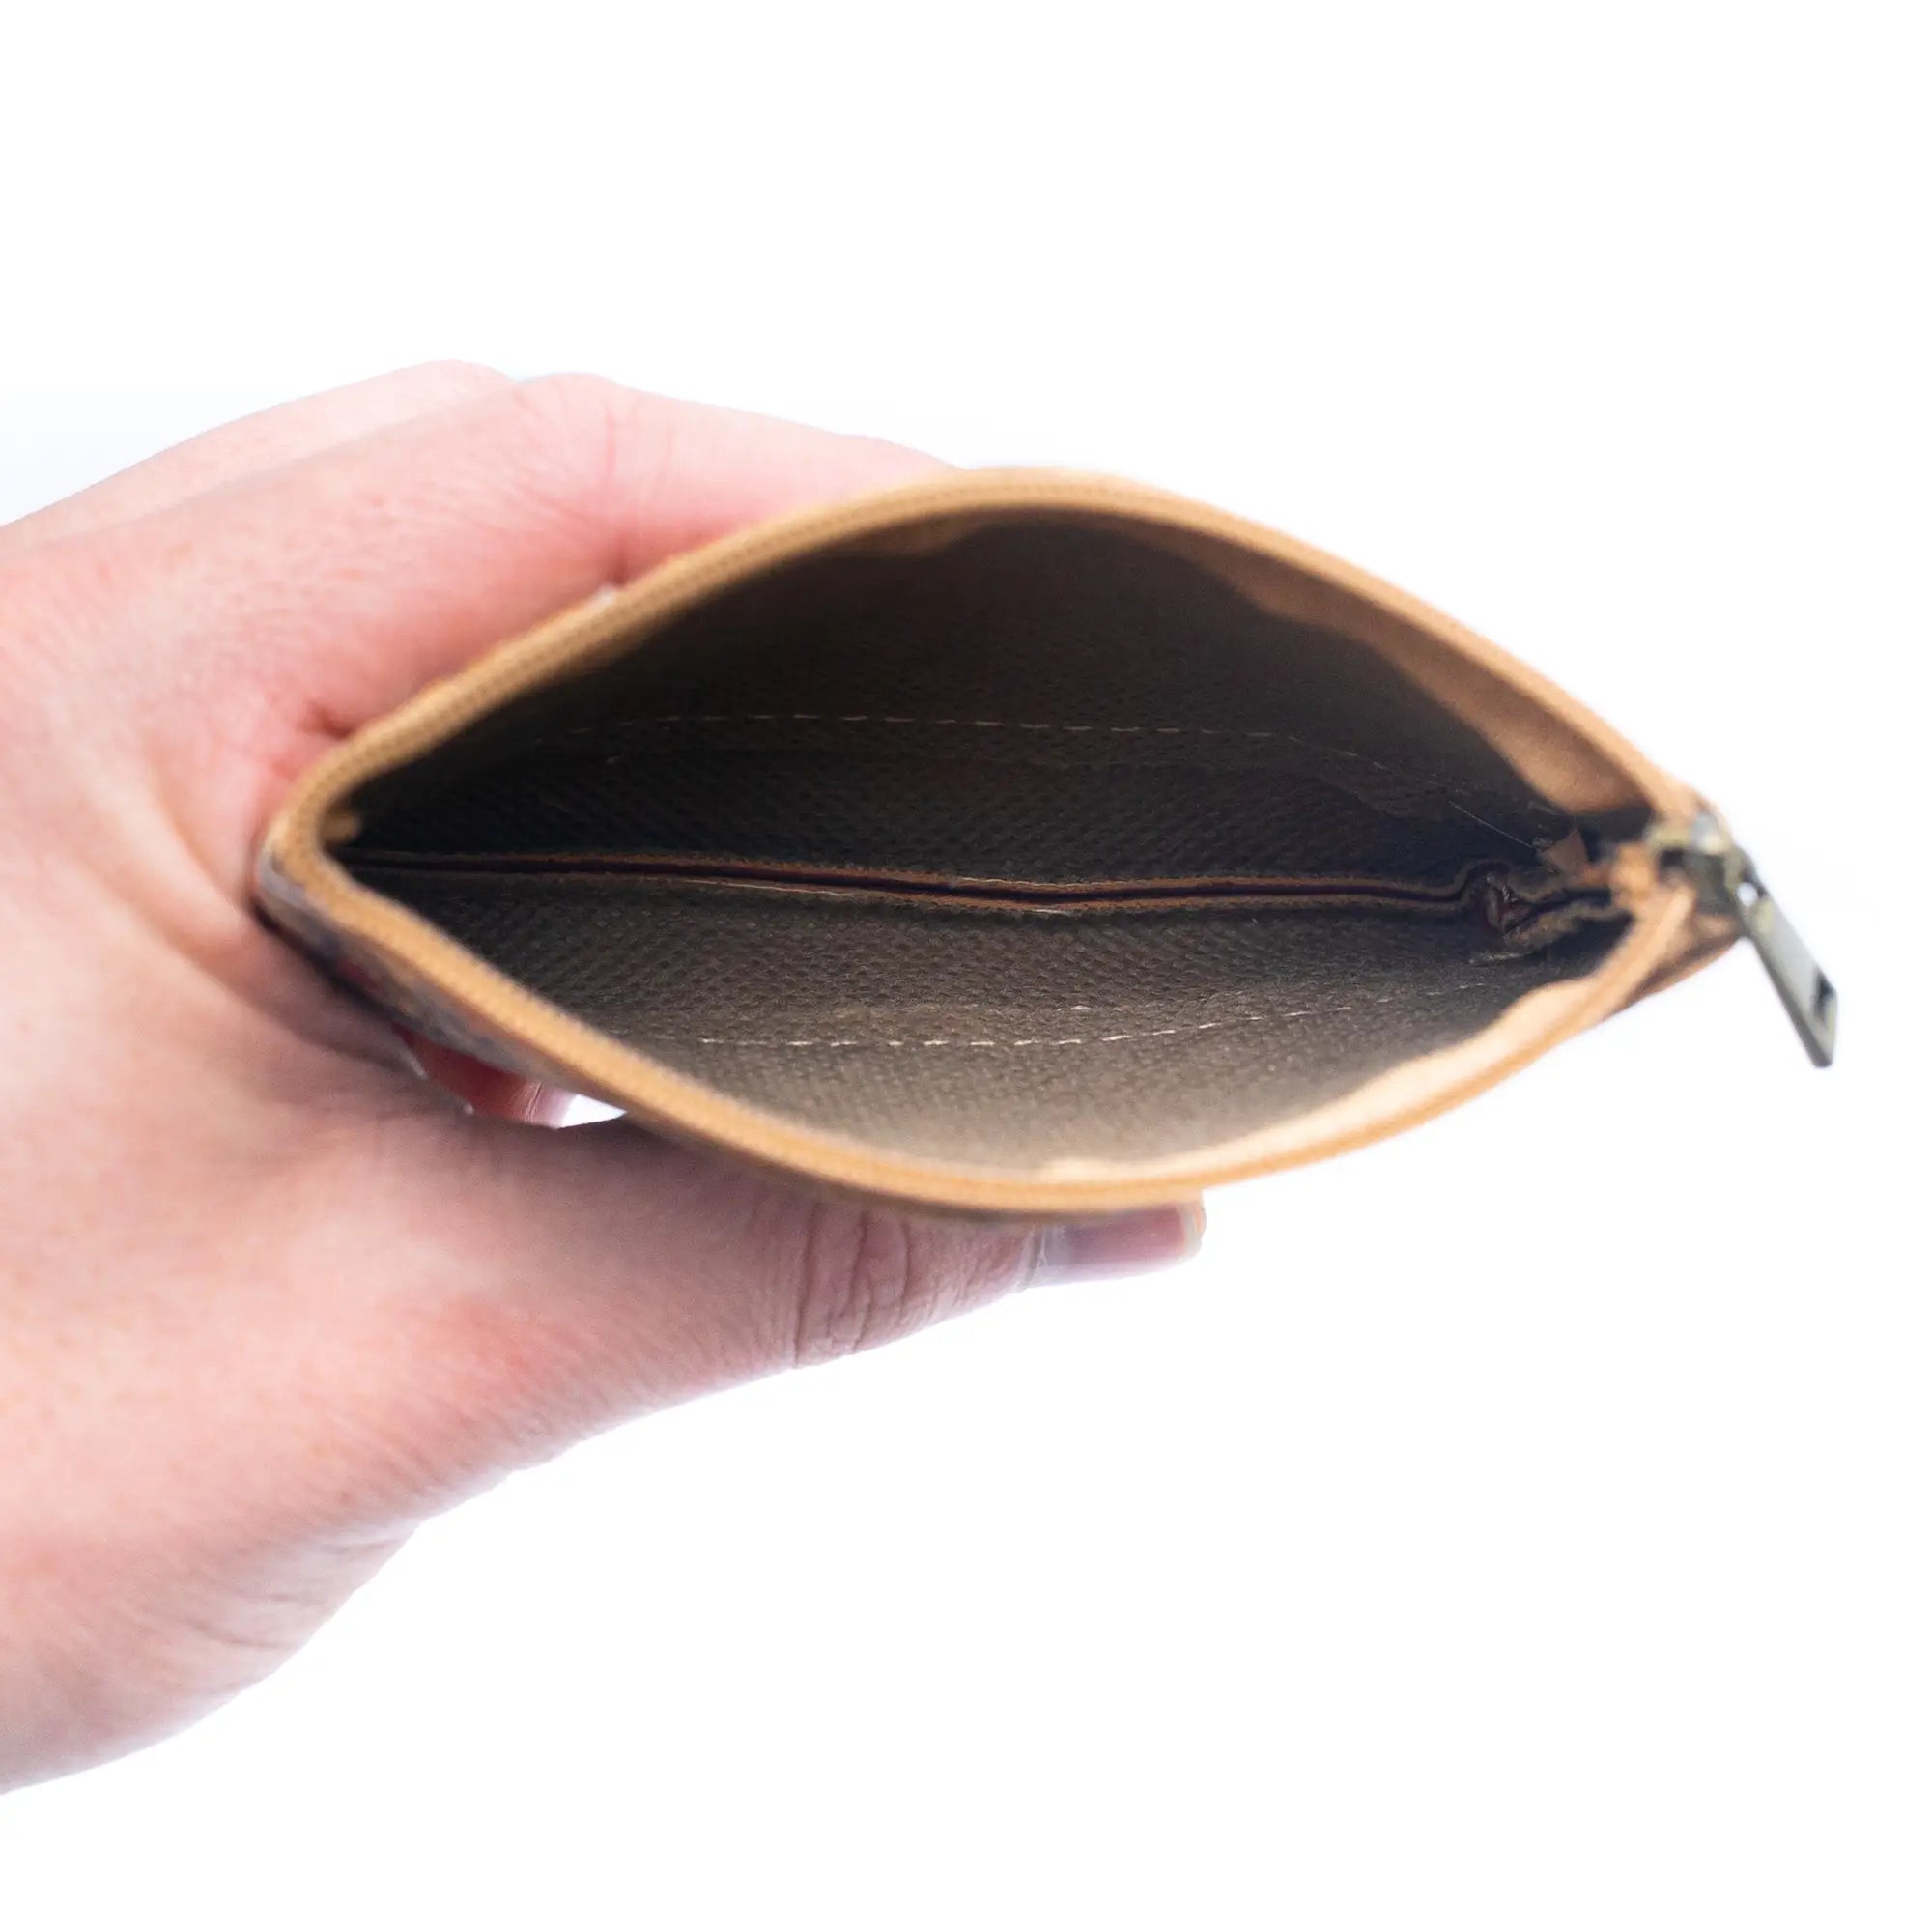 Angelco Accessories Single compartment cork coin purse - brown/orange